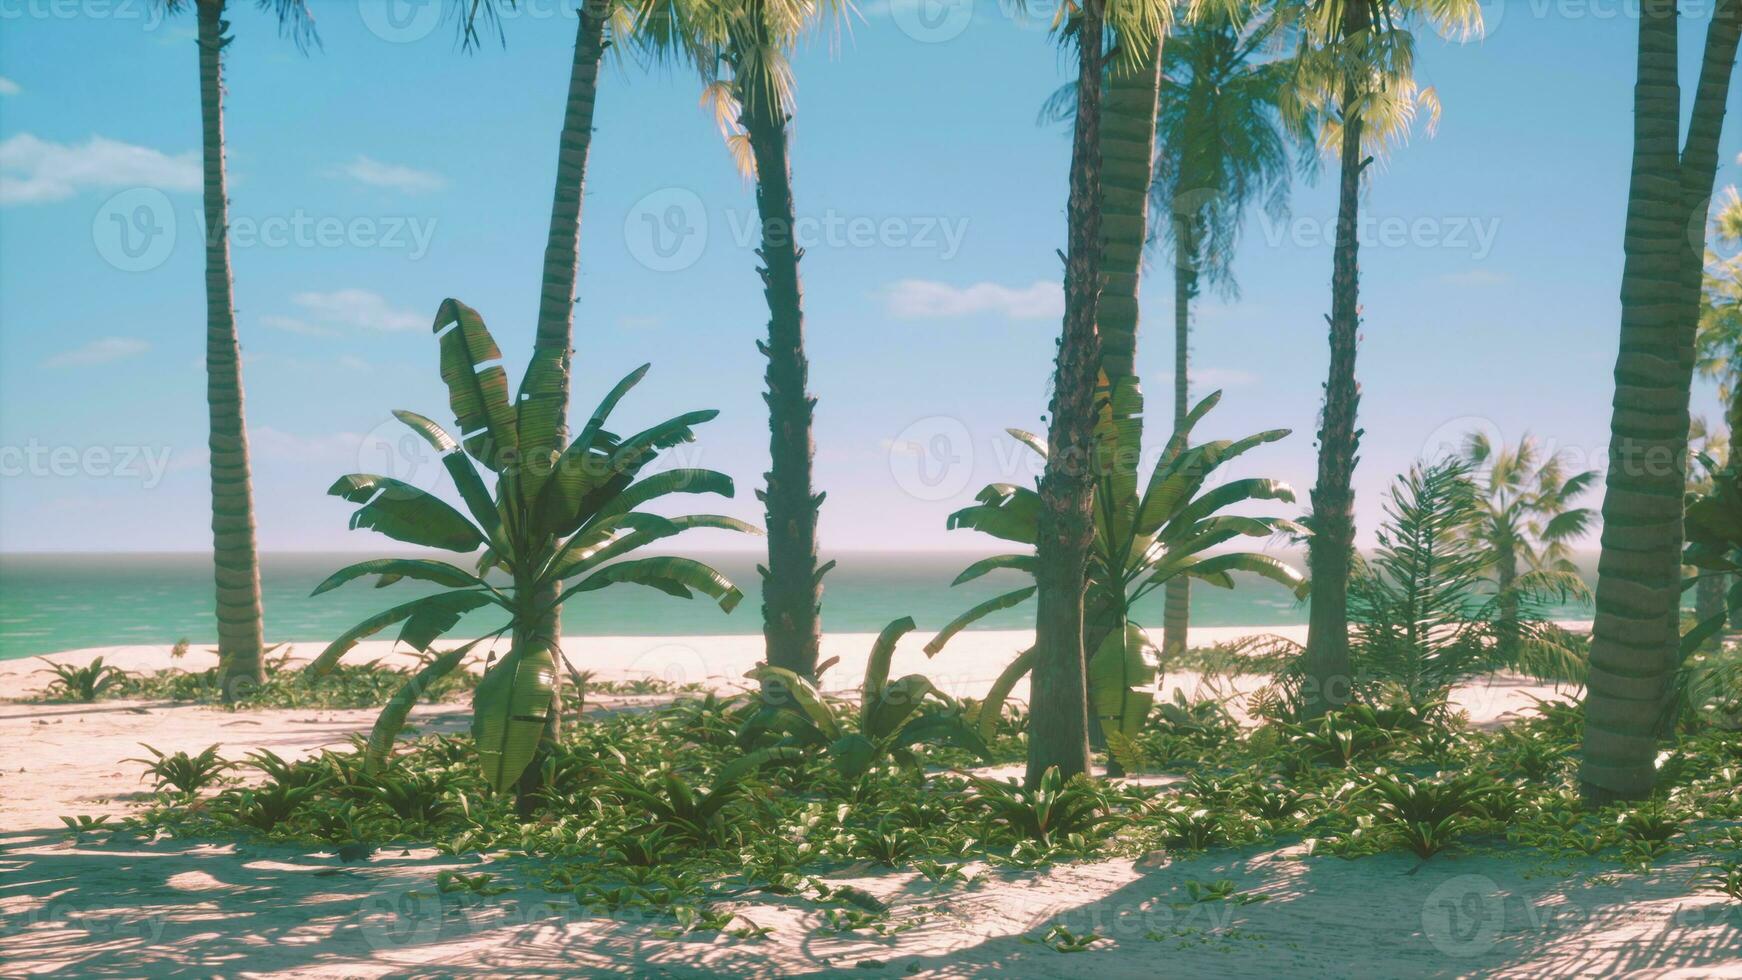 Miami South Beach park with palms photo